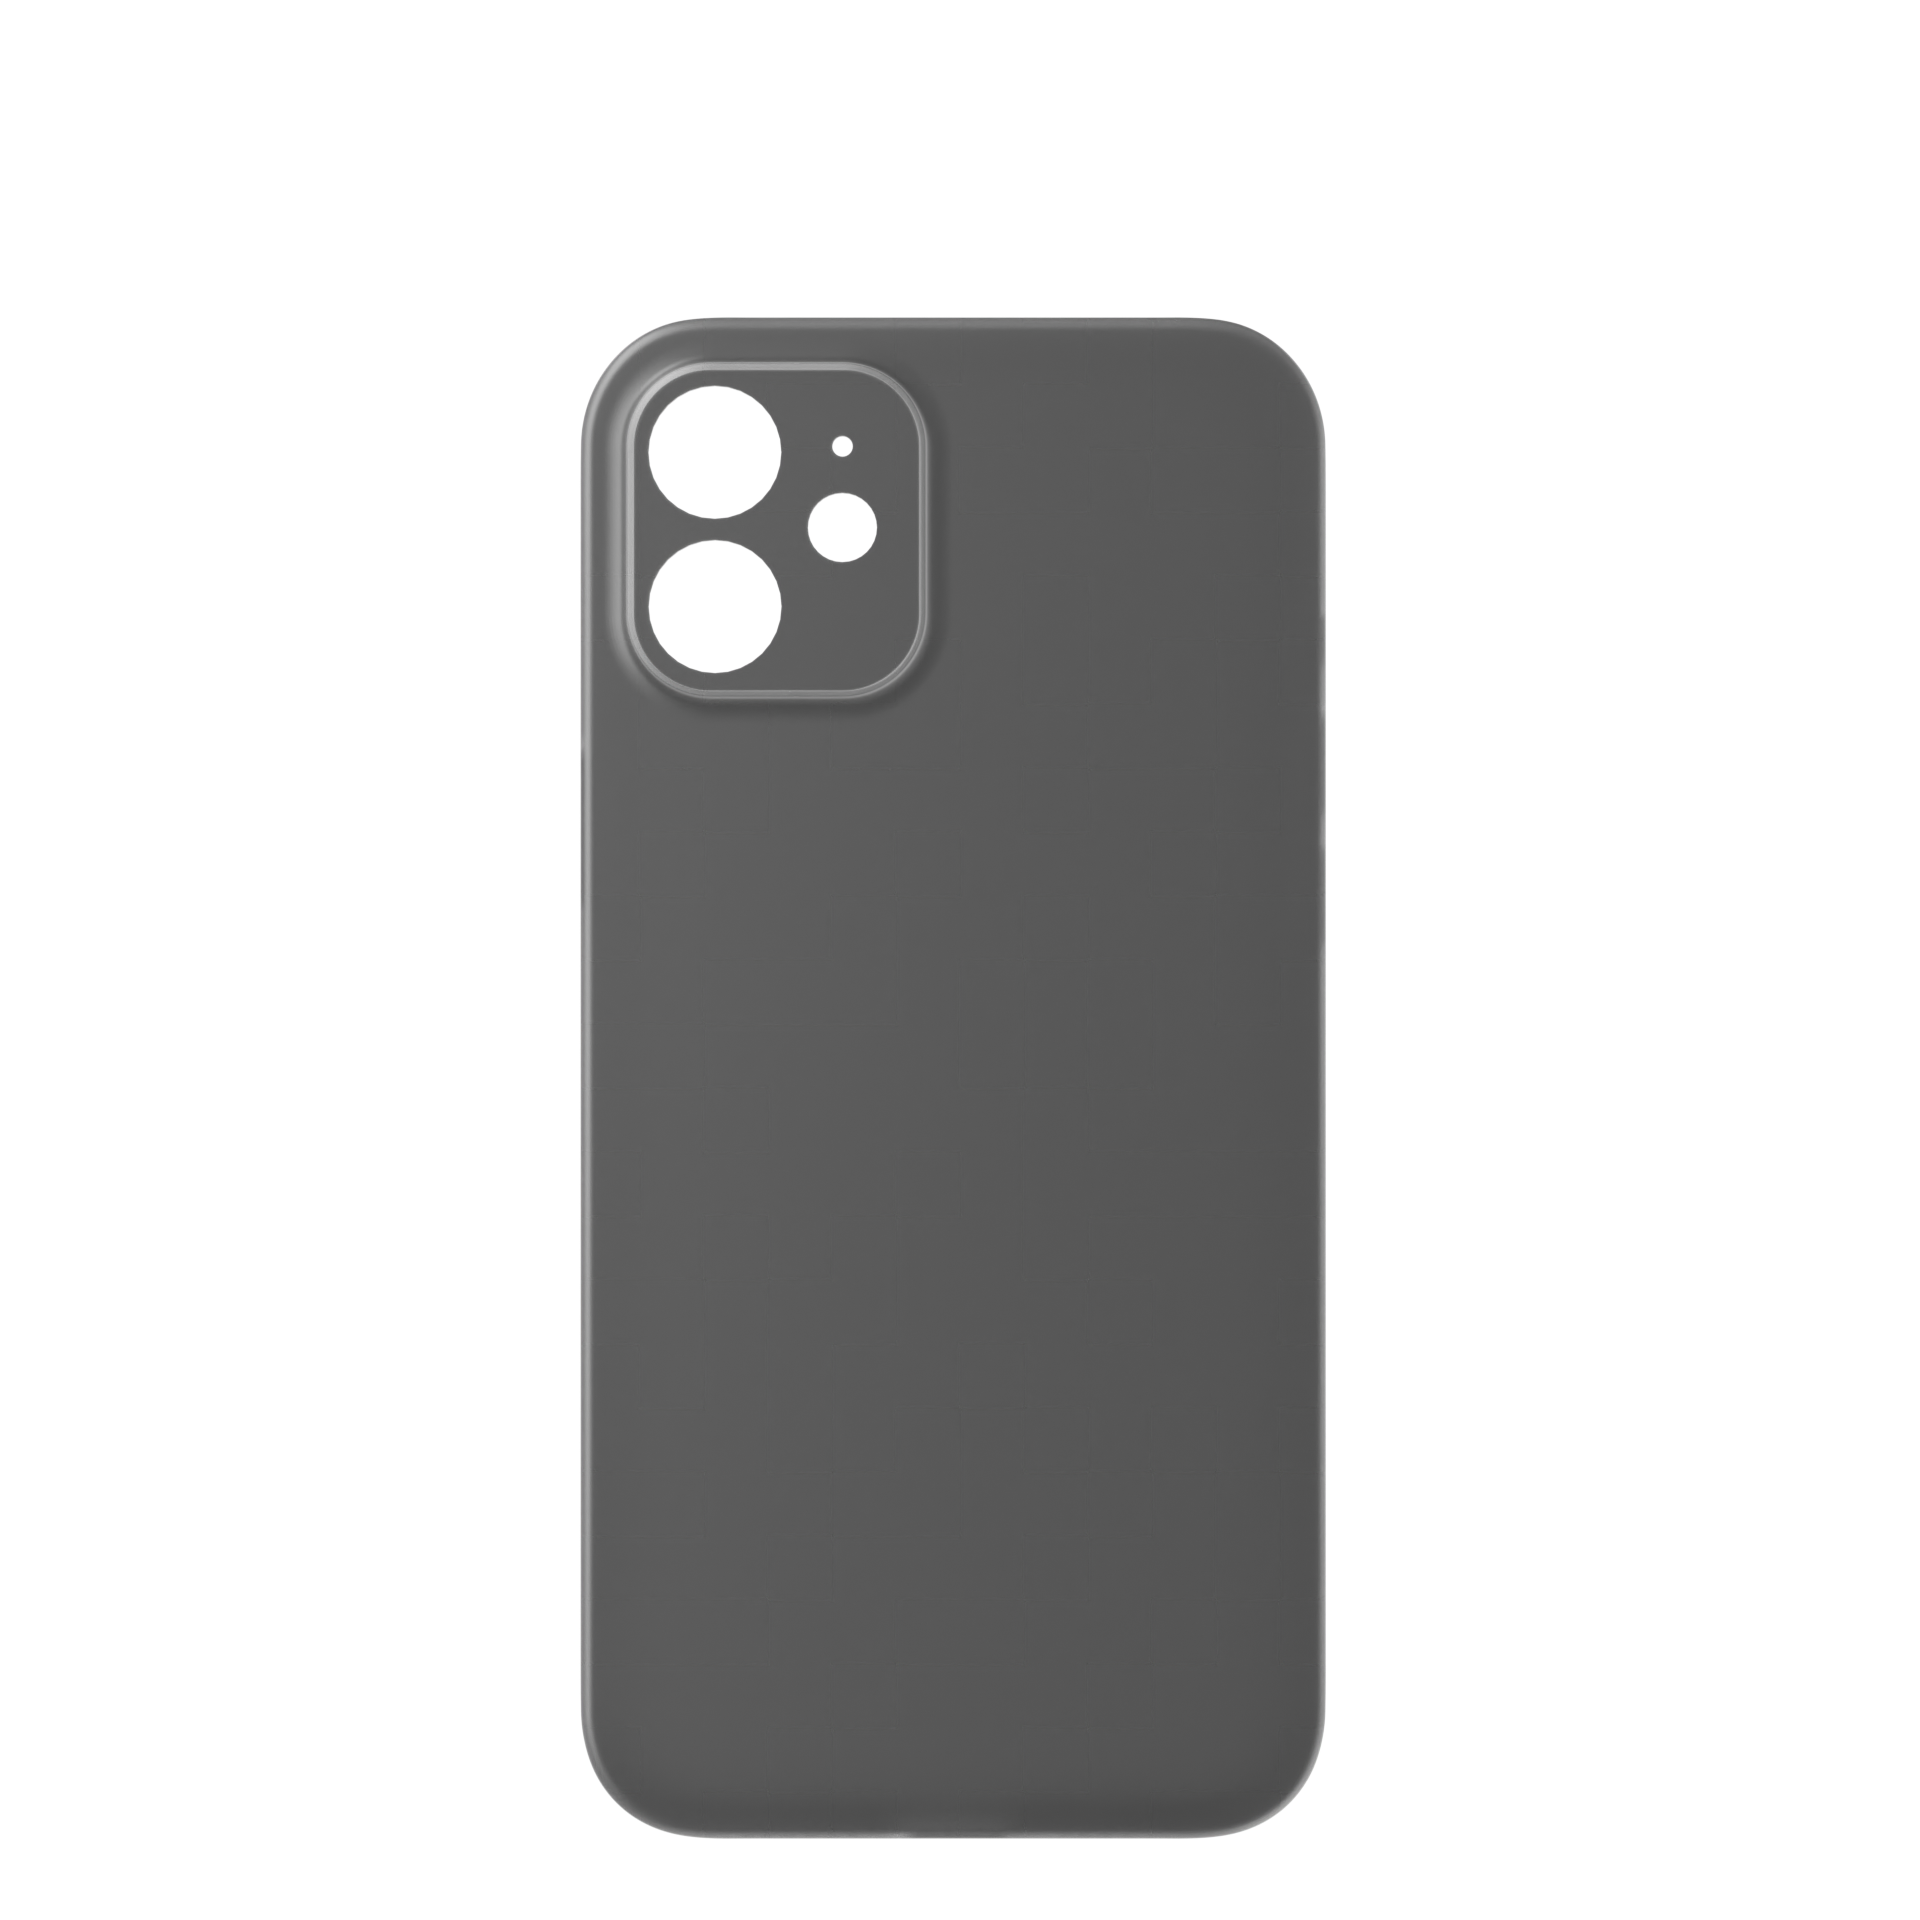 Thin black iPhone 12 Pro Max case